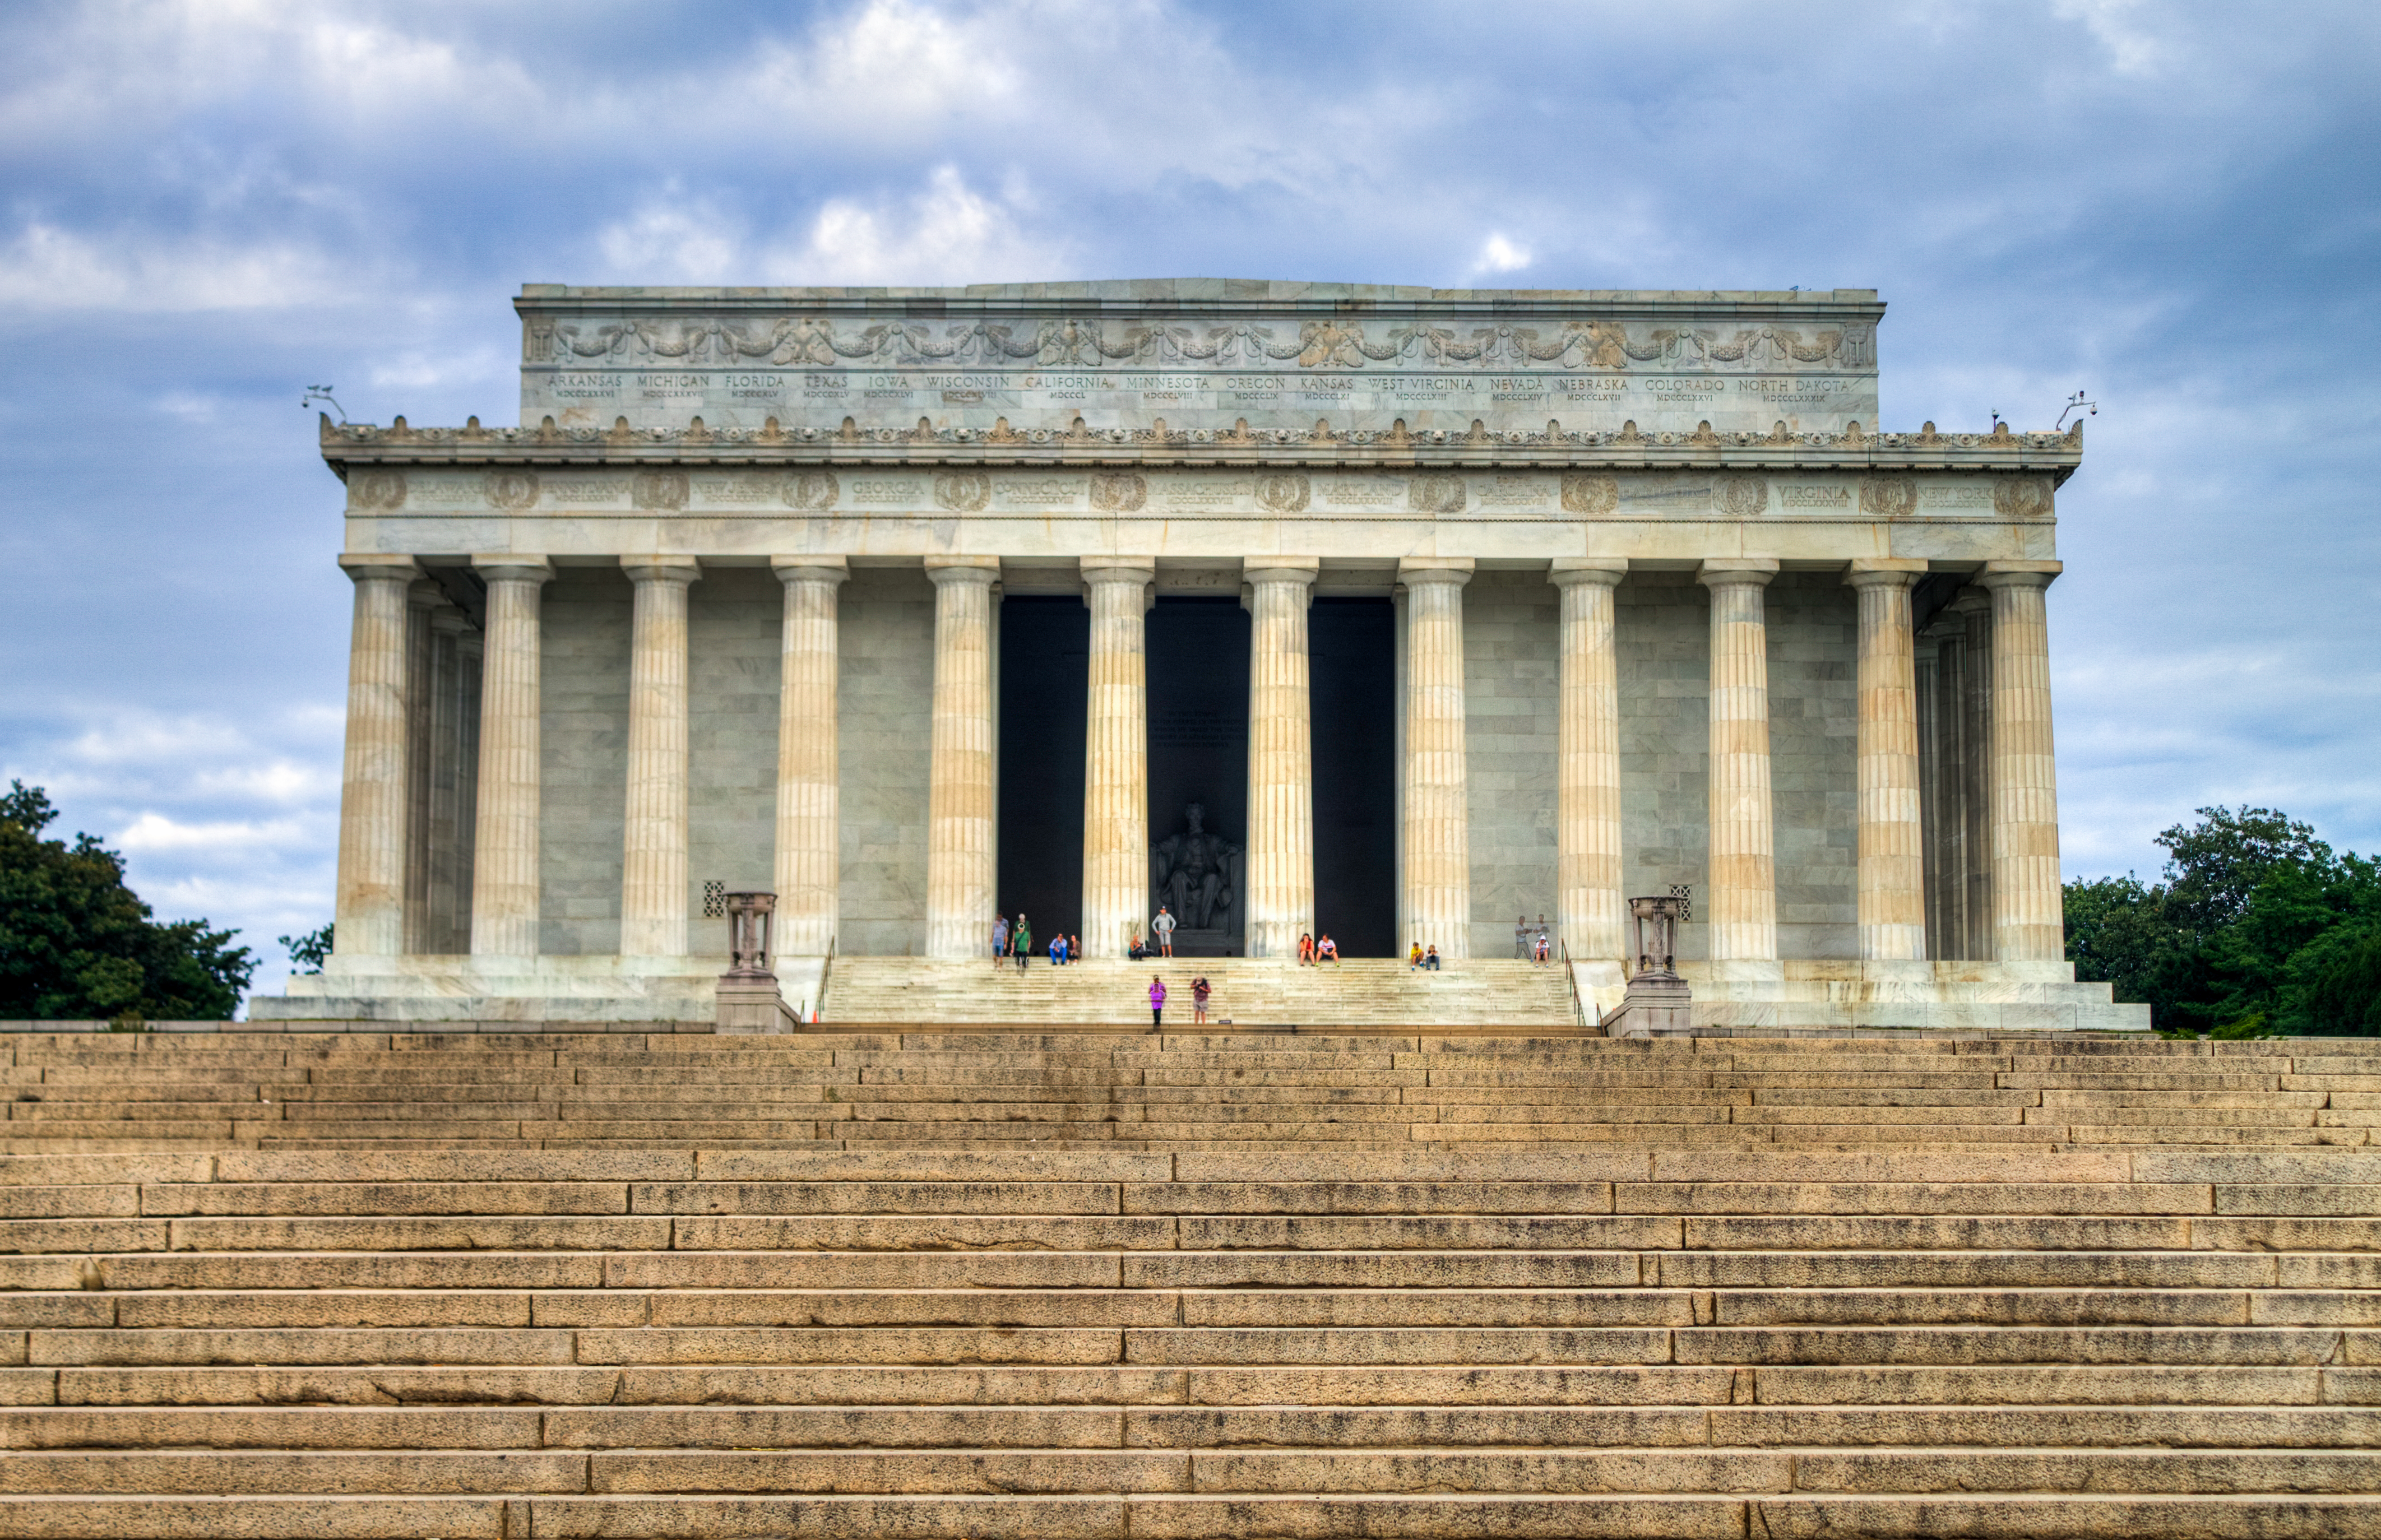 The Lincoln Memorial in Washington, D.C. - Lincoln Memorial, West Potomac Park Monumental Core